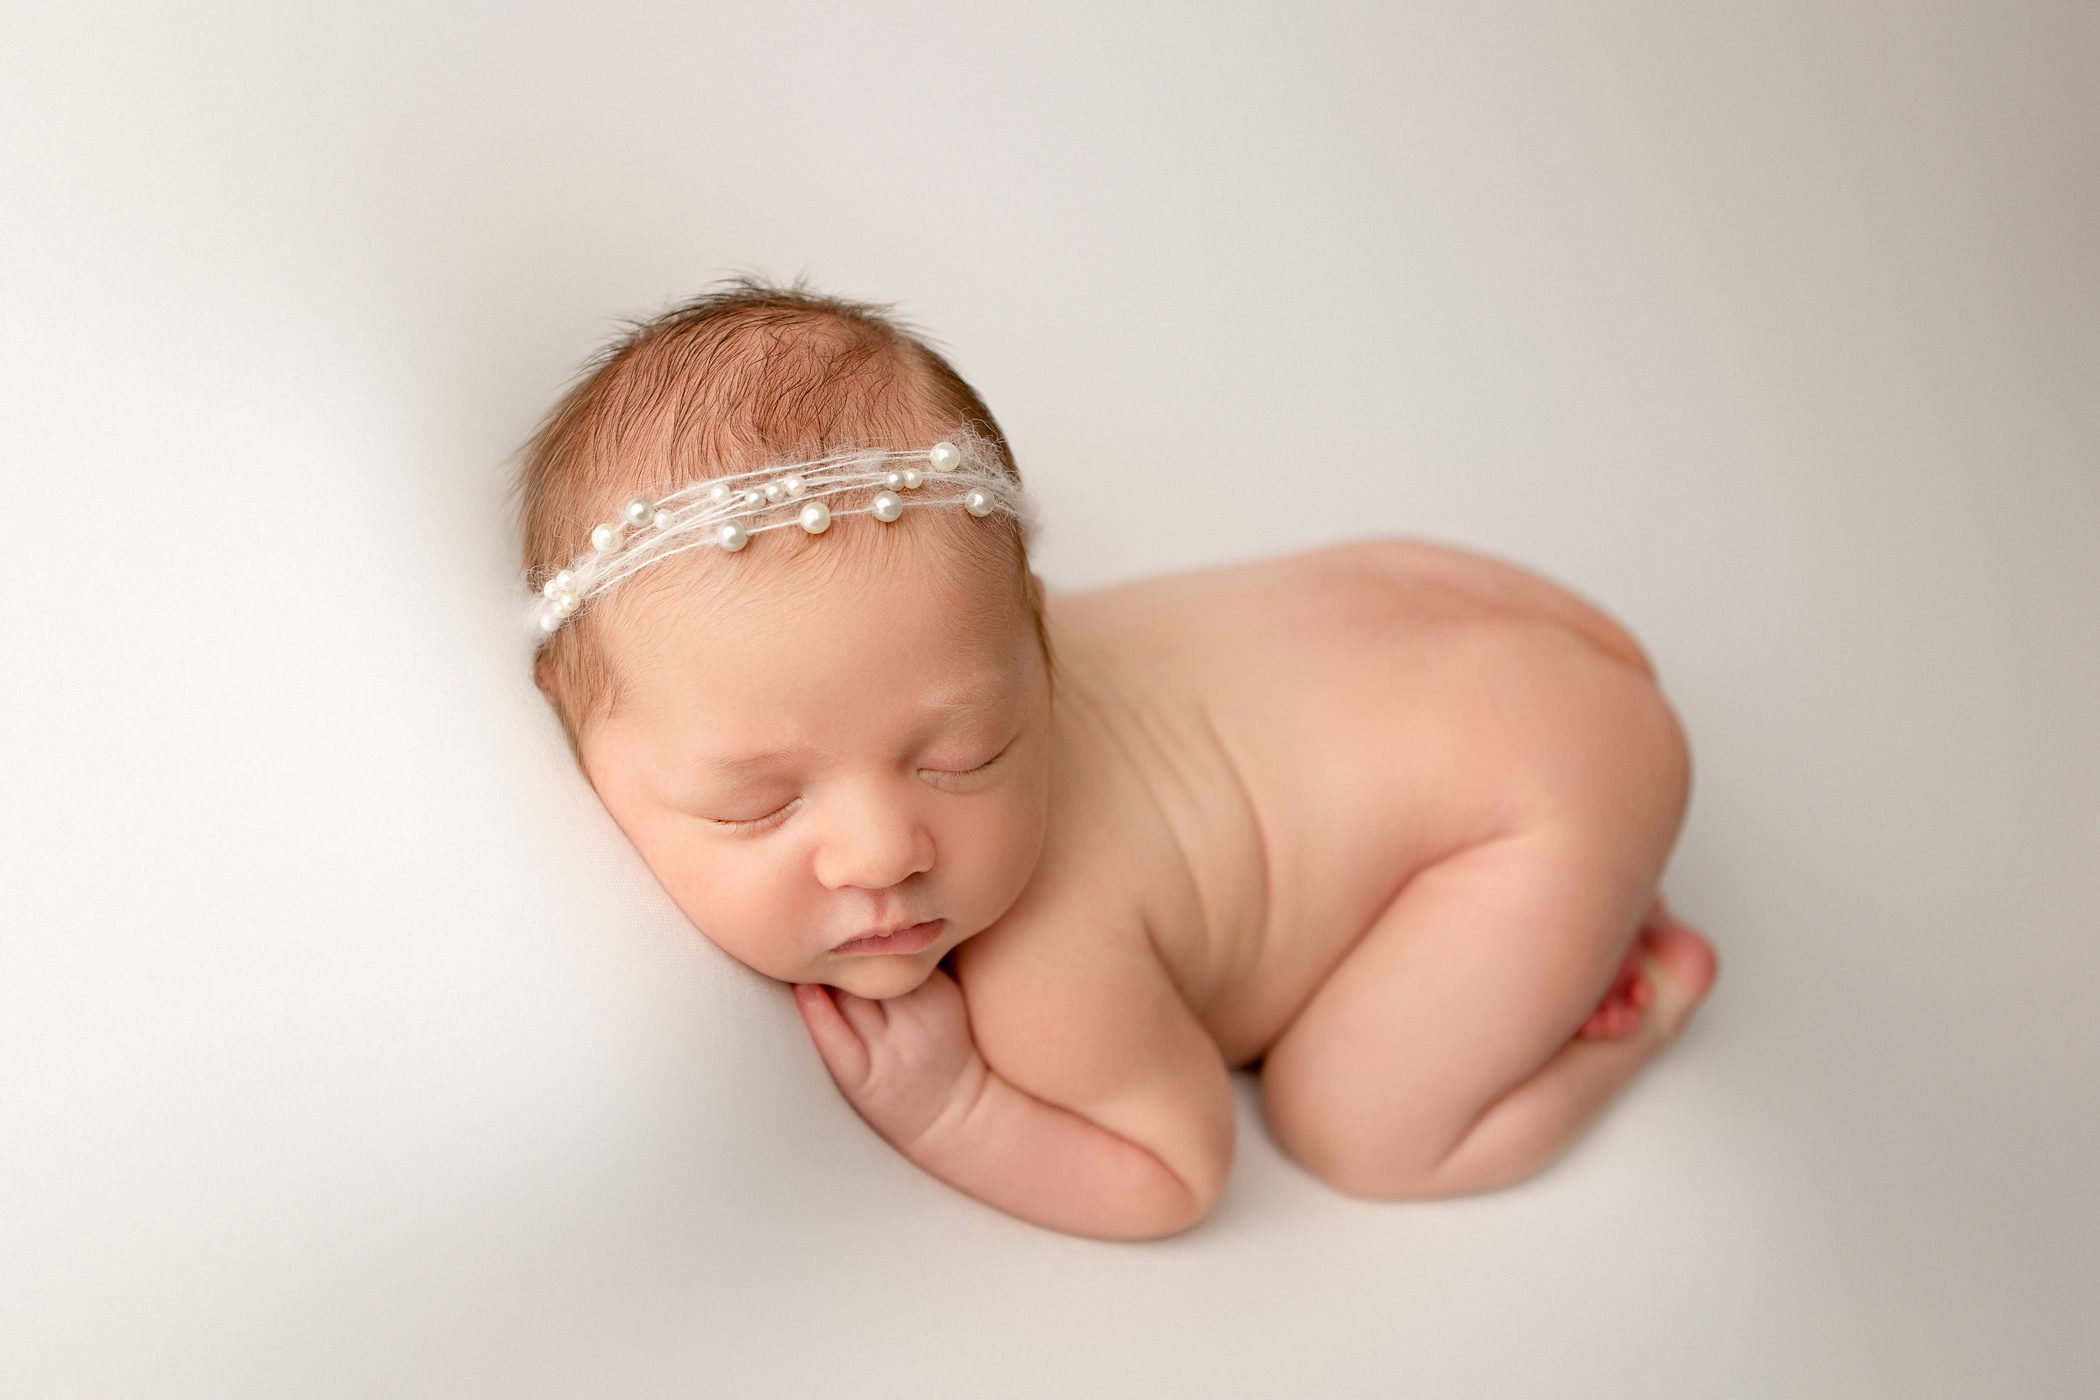 fresno newborn baby girl tushy up bum up pose white background pearl headband fresno clovis california